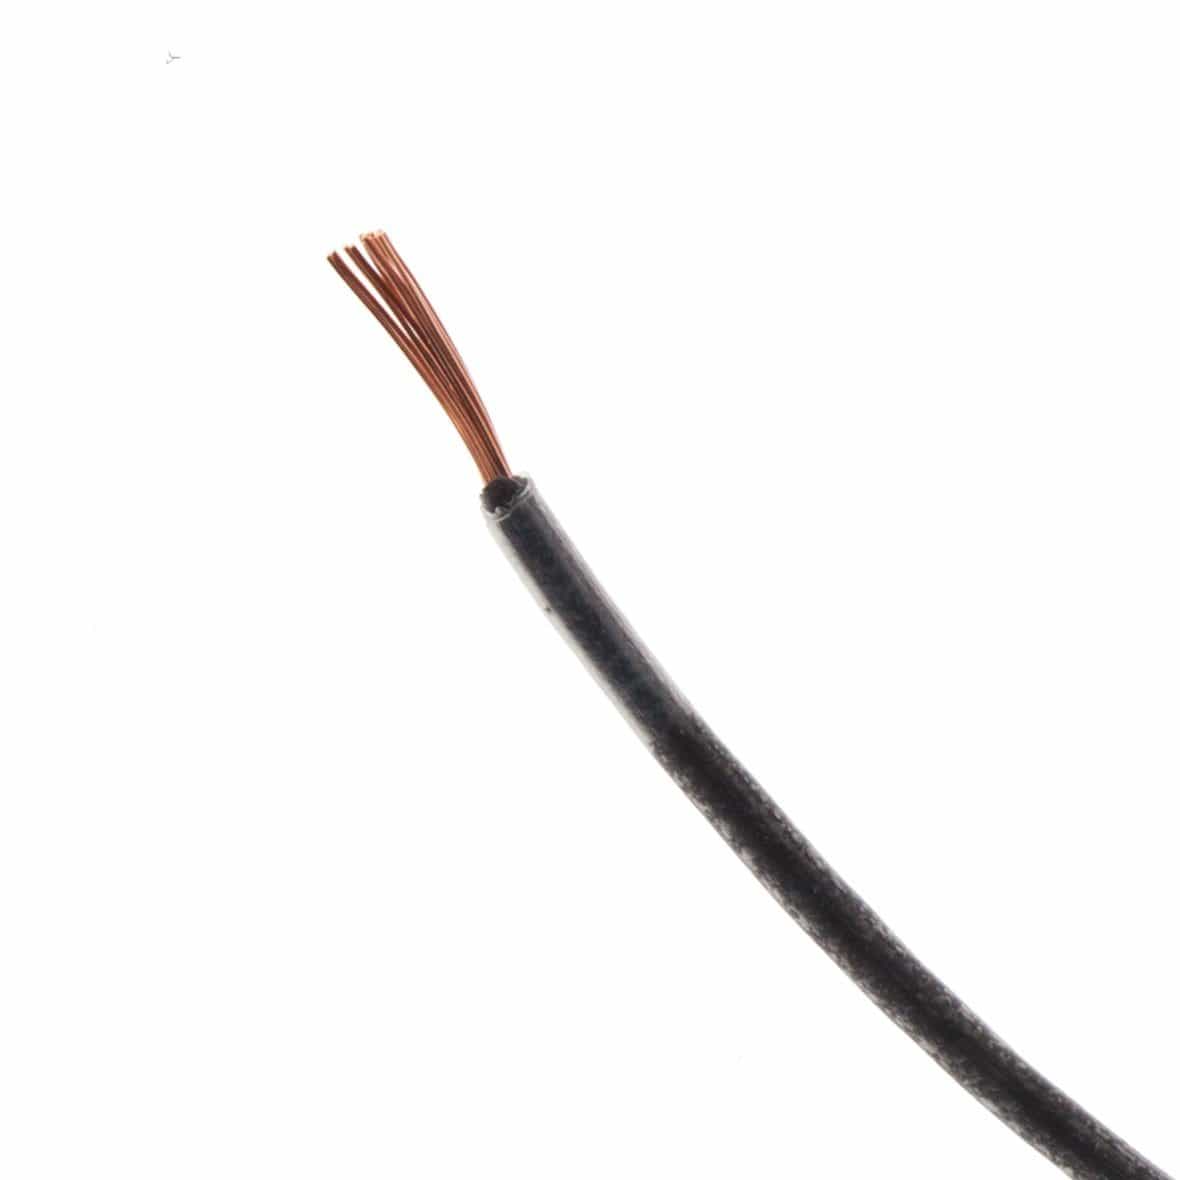 18g Stranded Copper Conductor Wire